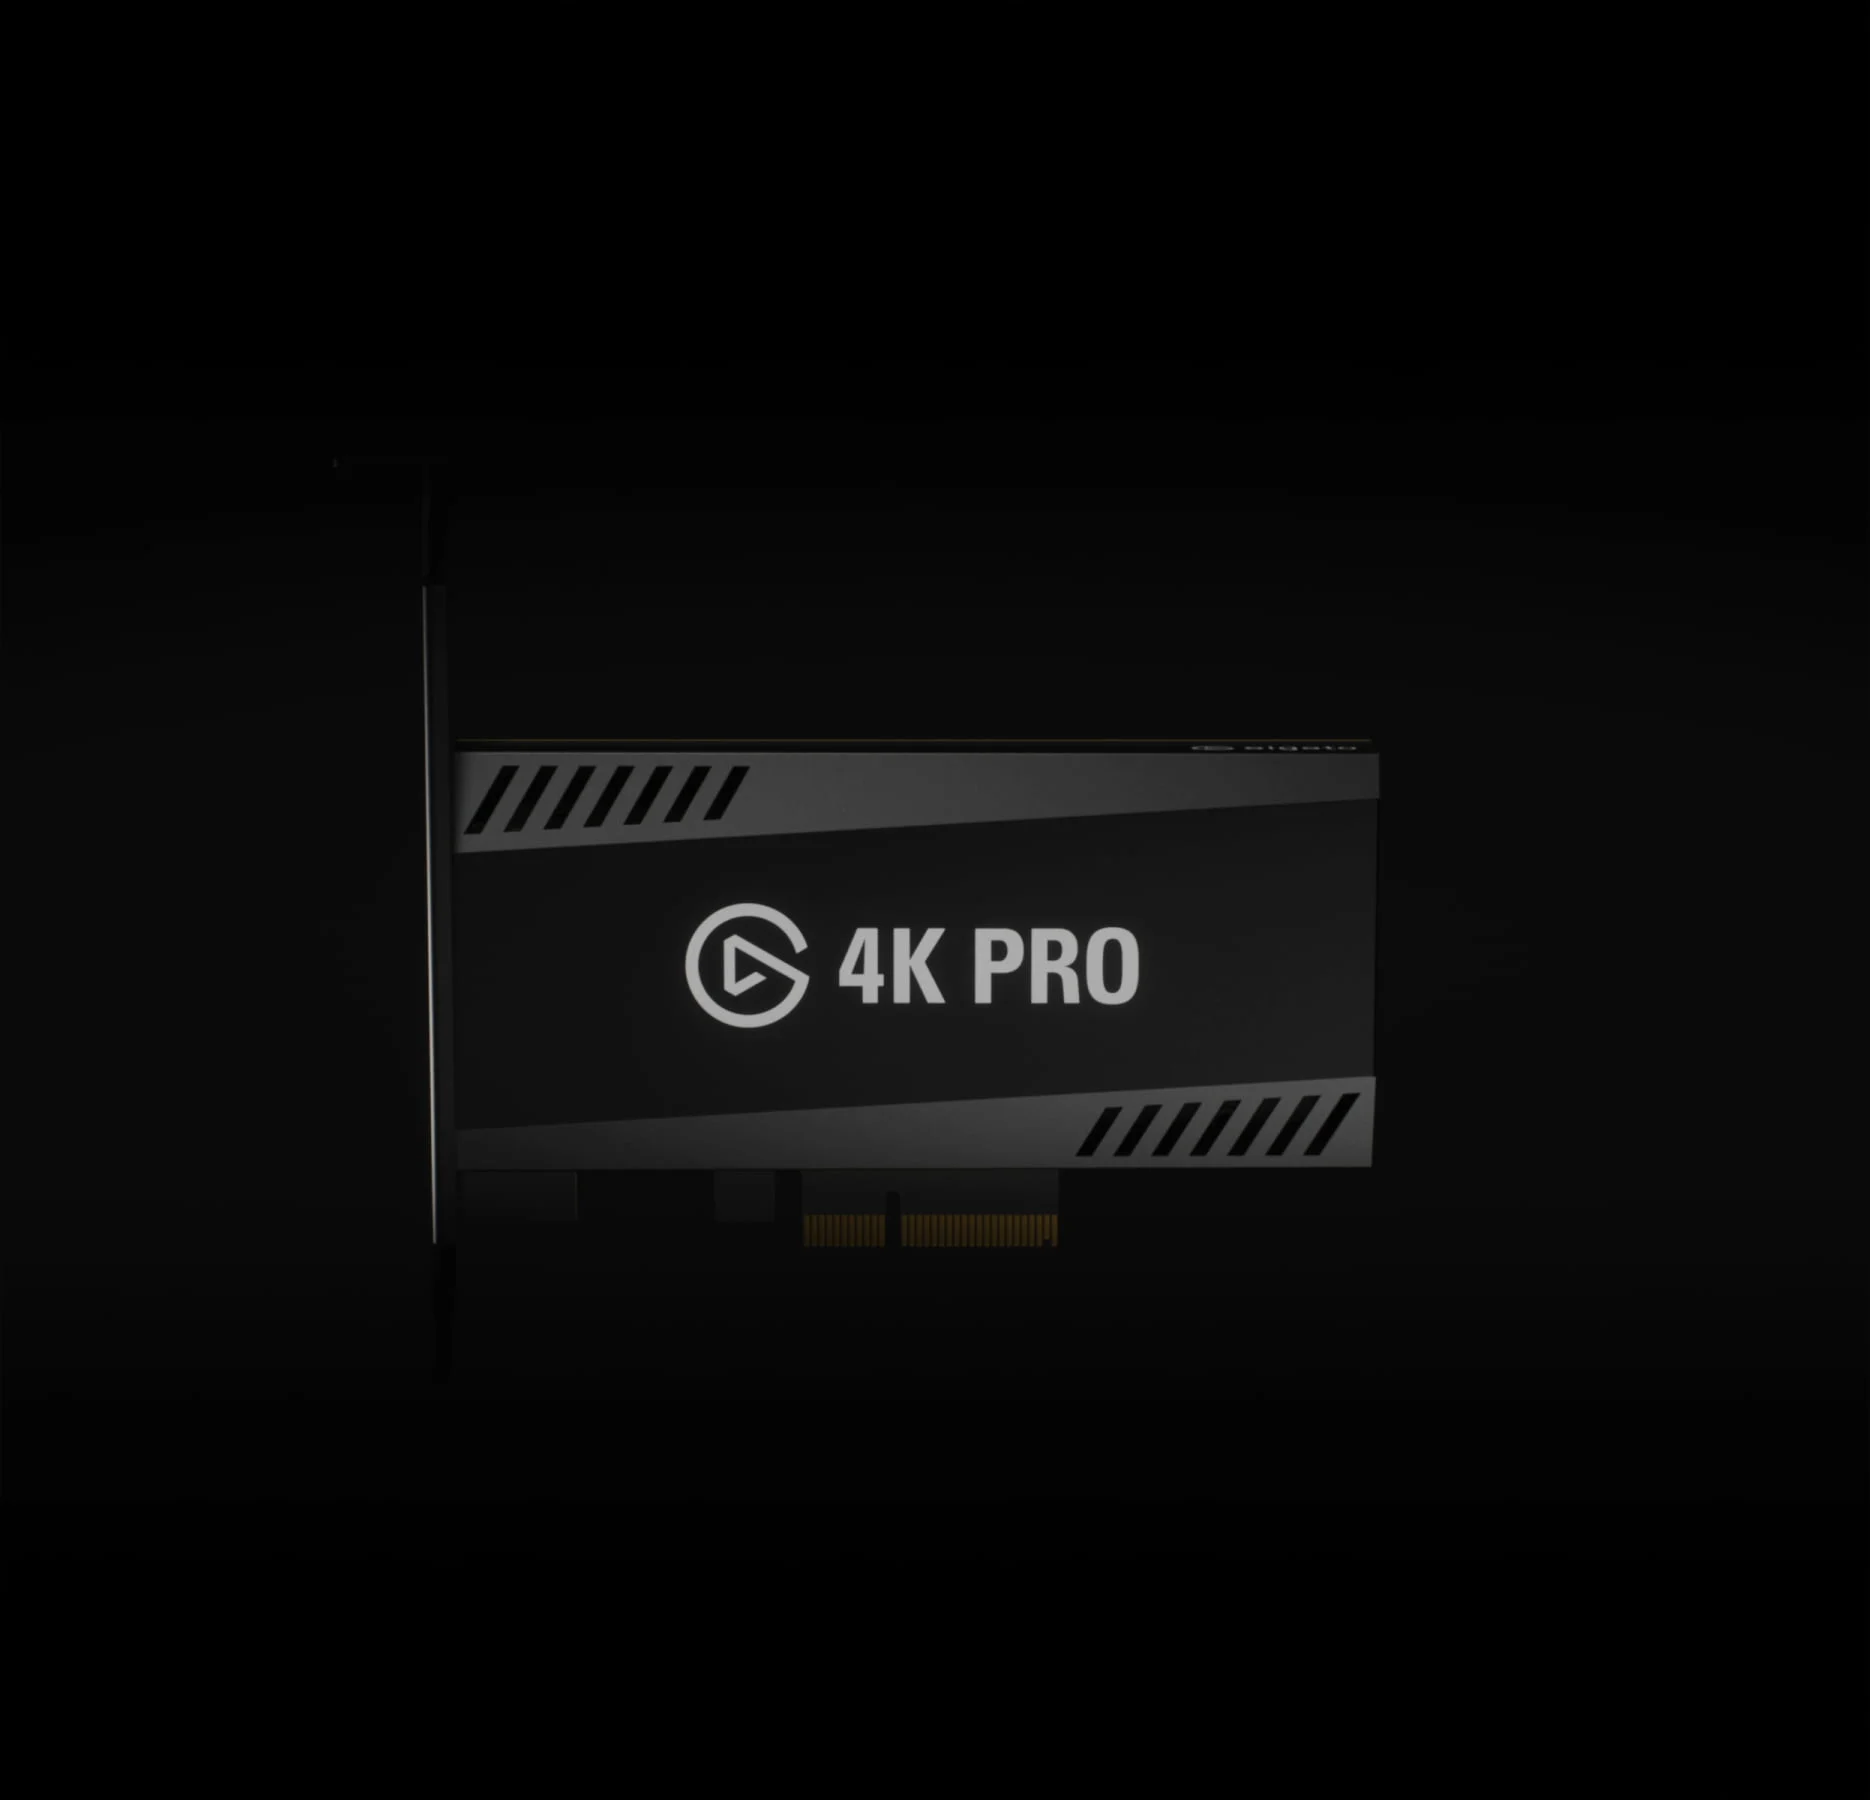 Capturadora de video 4k60 Pro, Sofmat